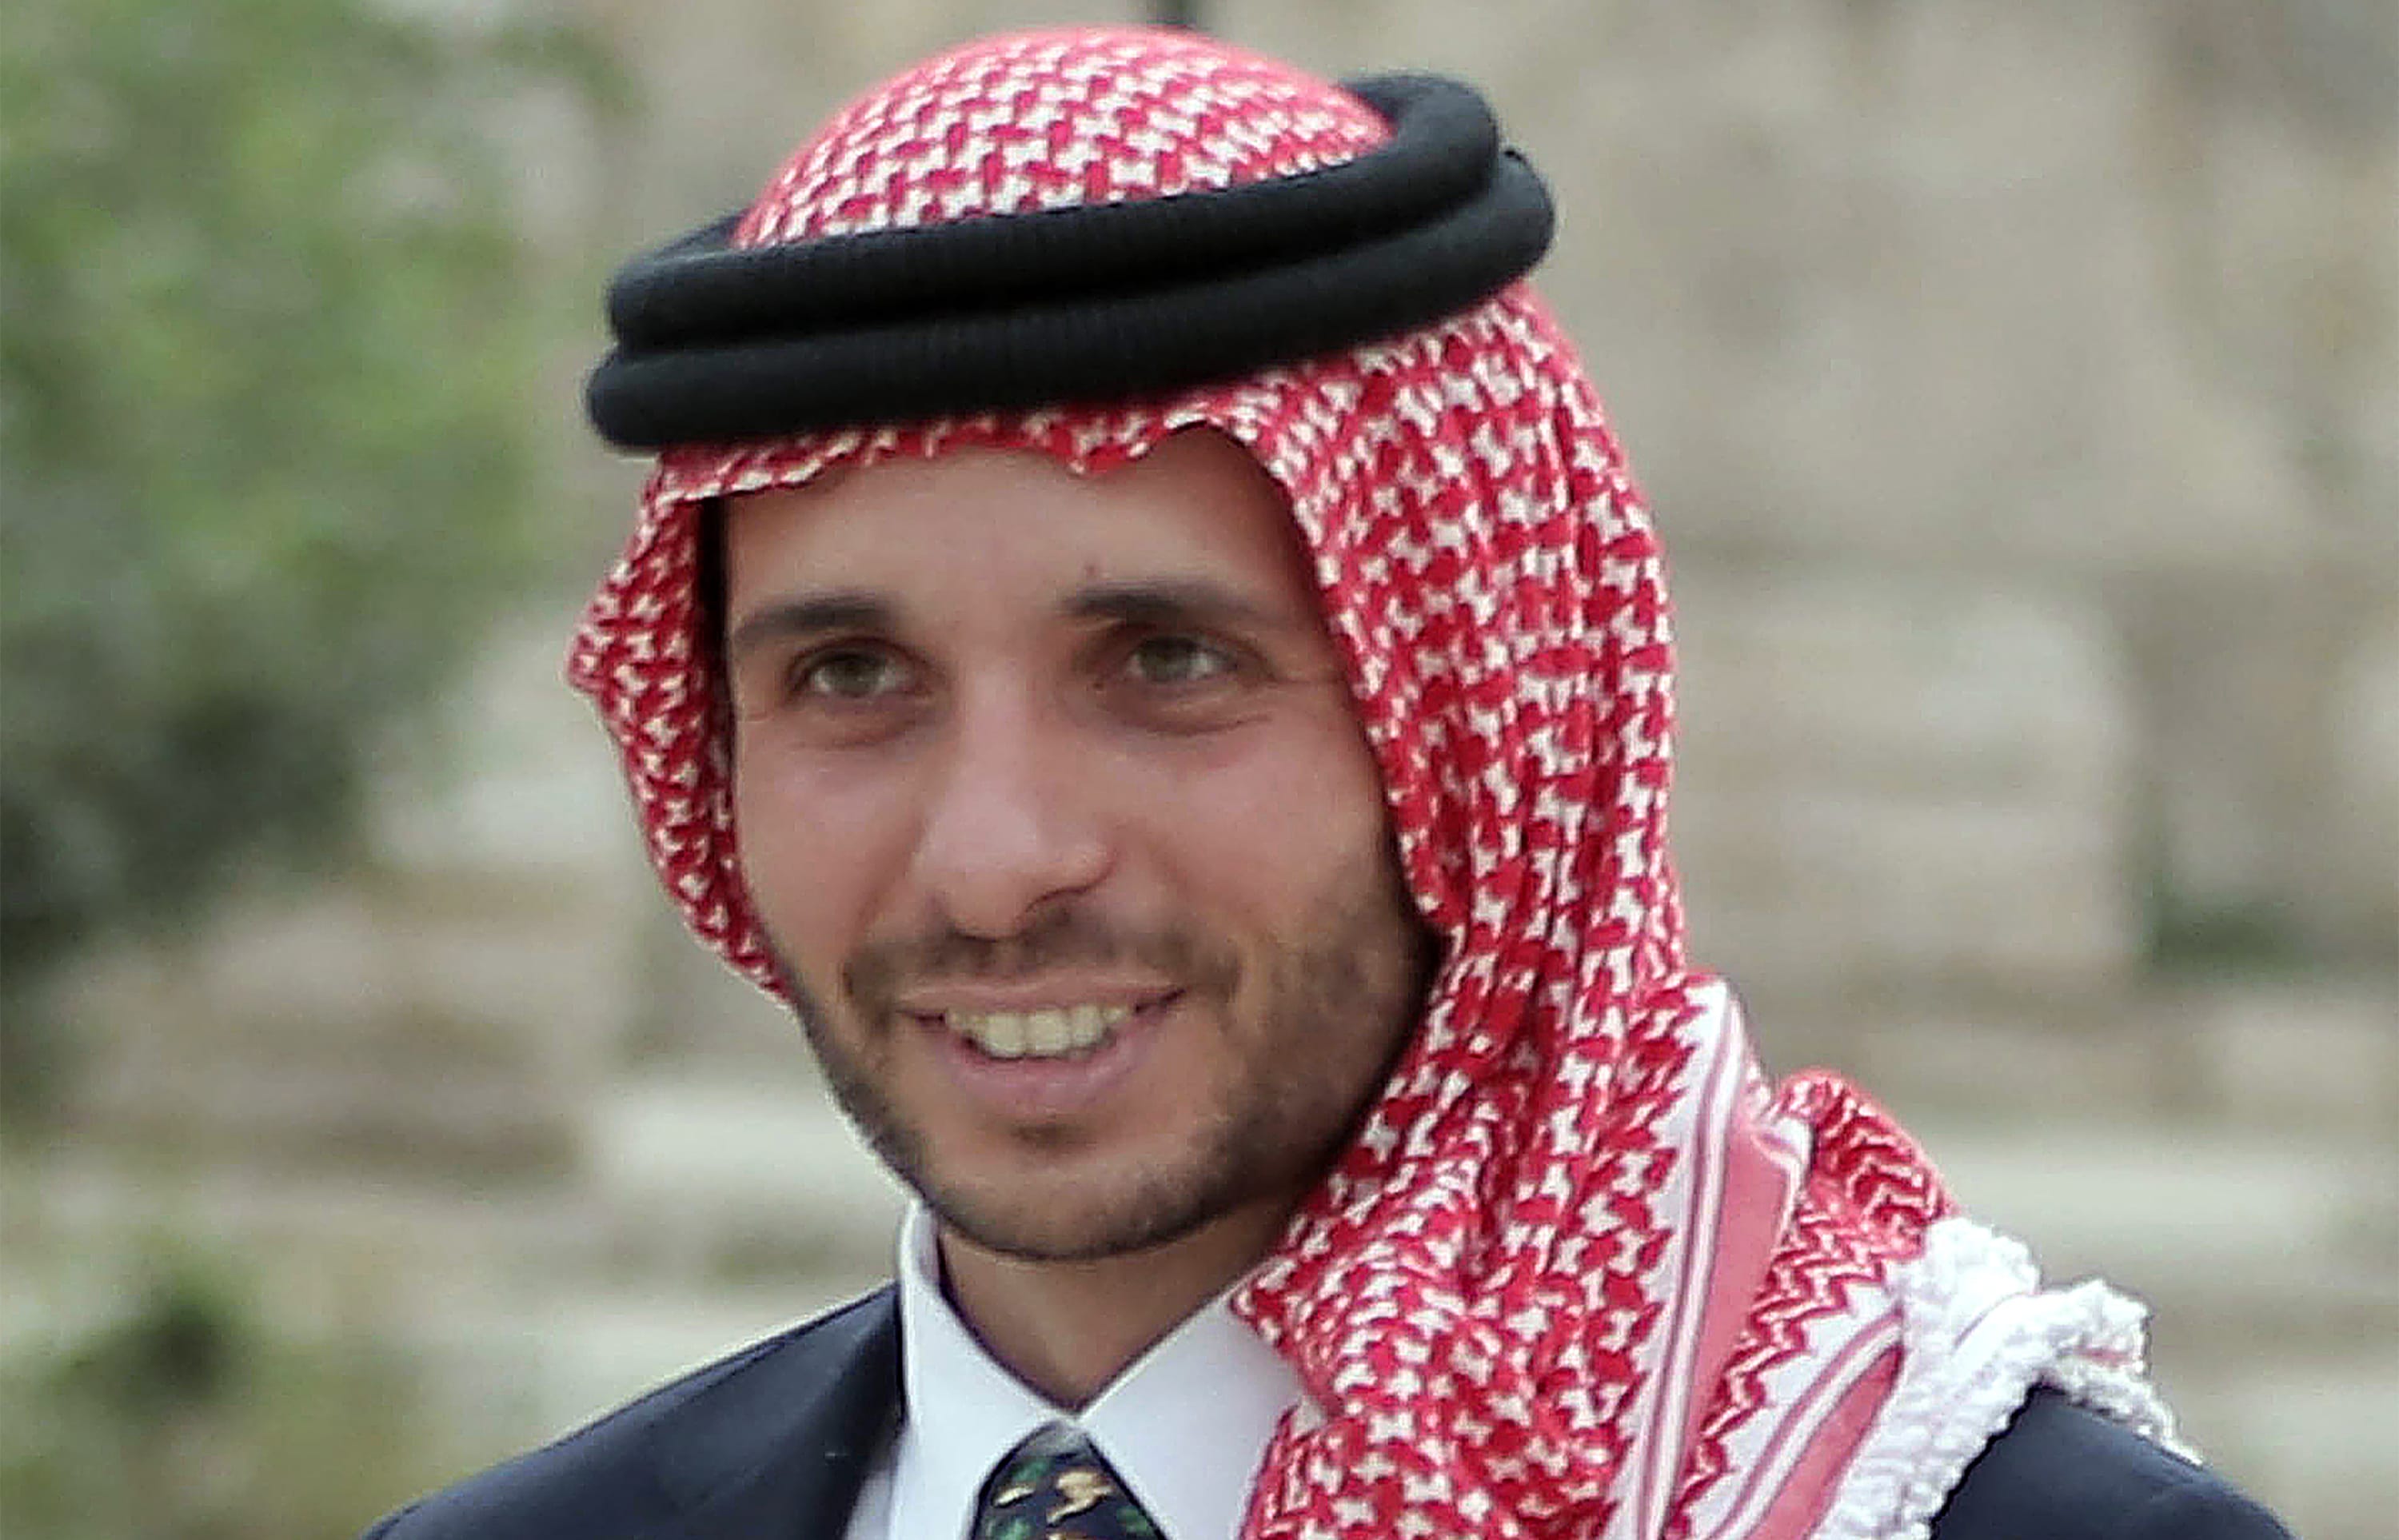 Jordan's Prince Hamzah bin Hussein attends a press event in Amman in September 2015.